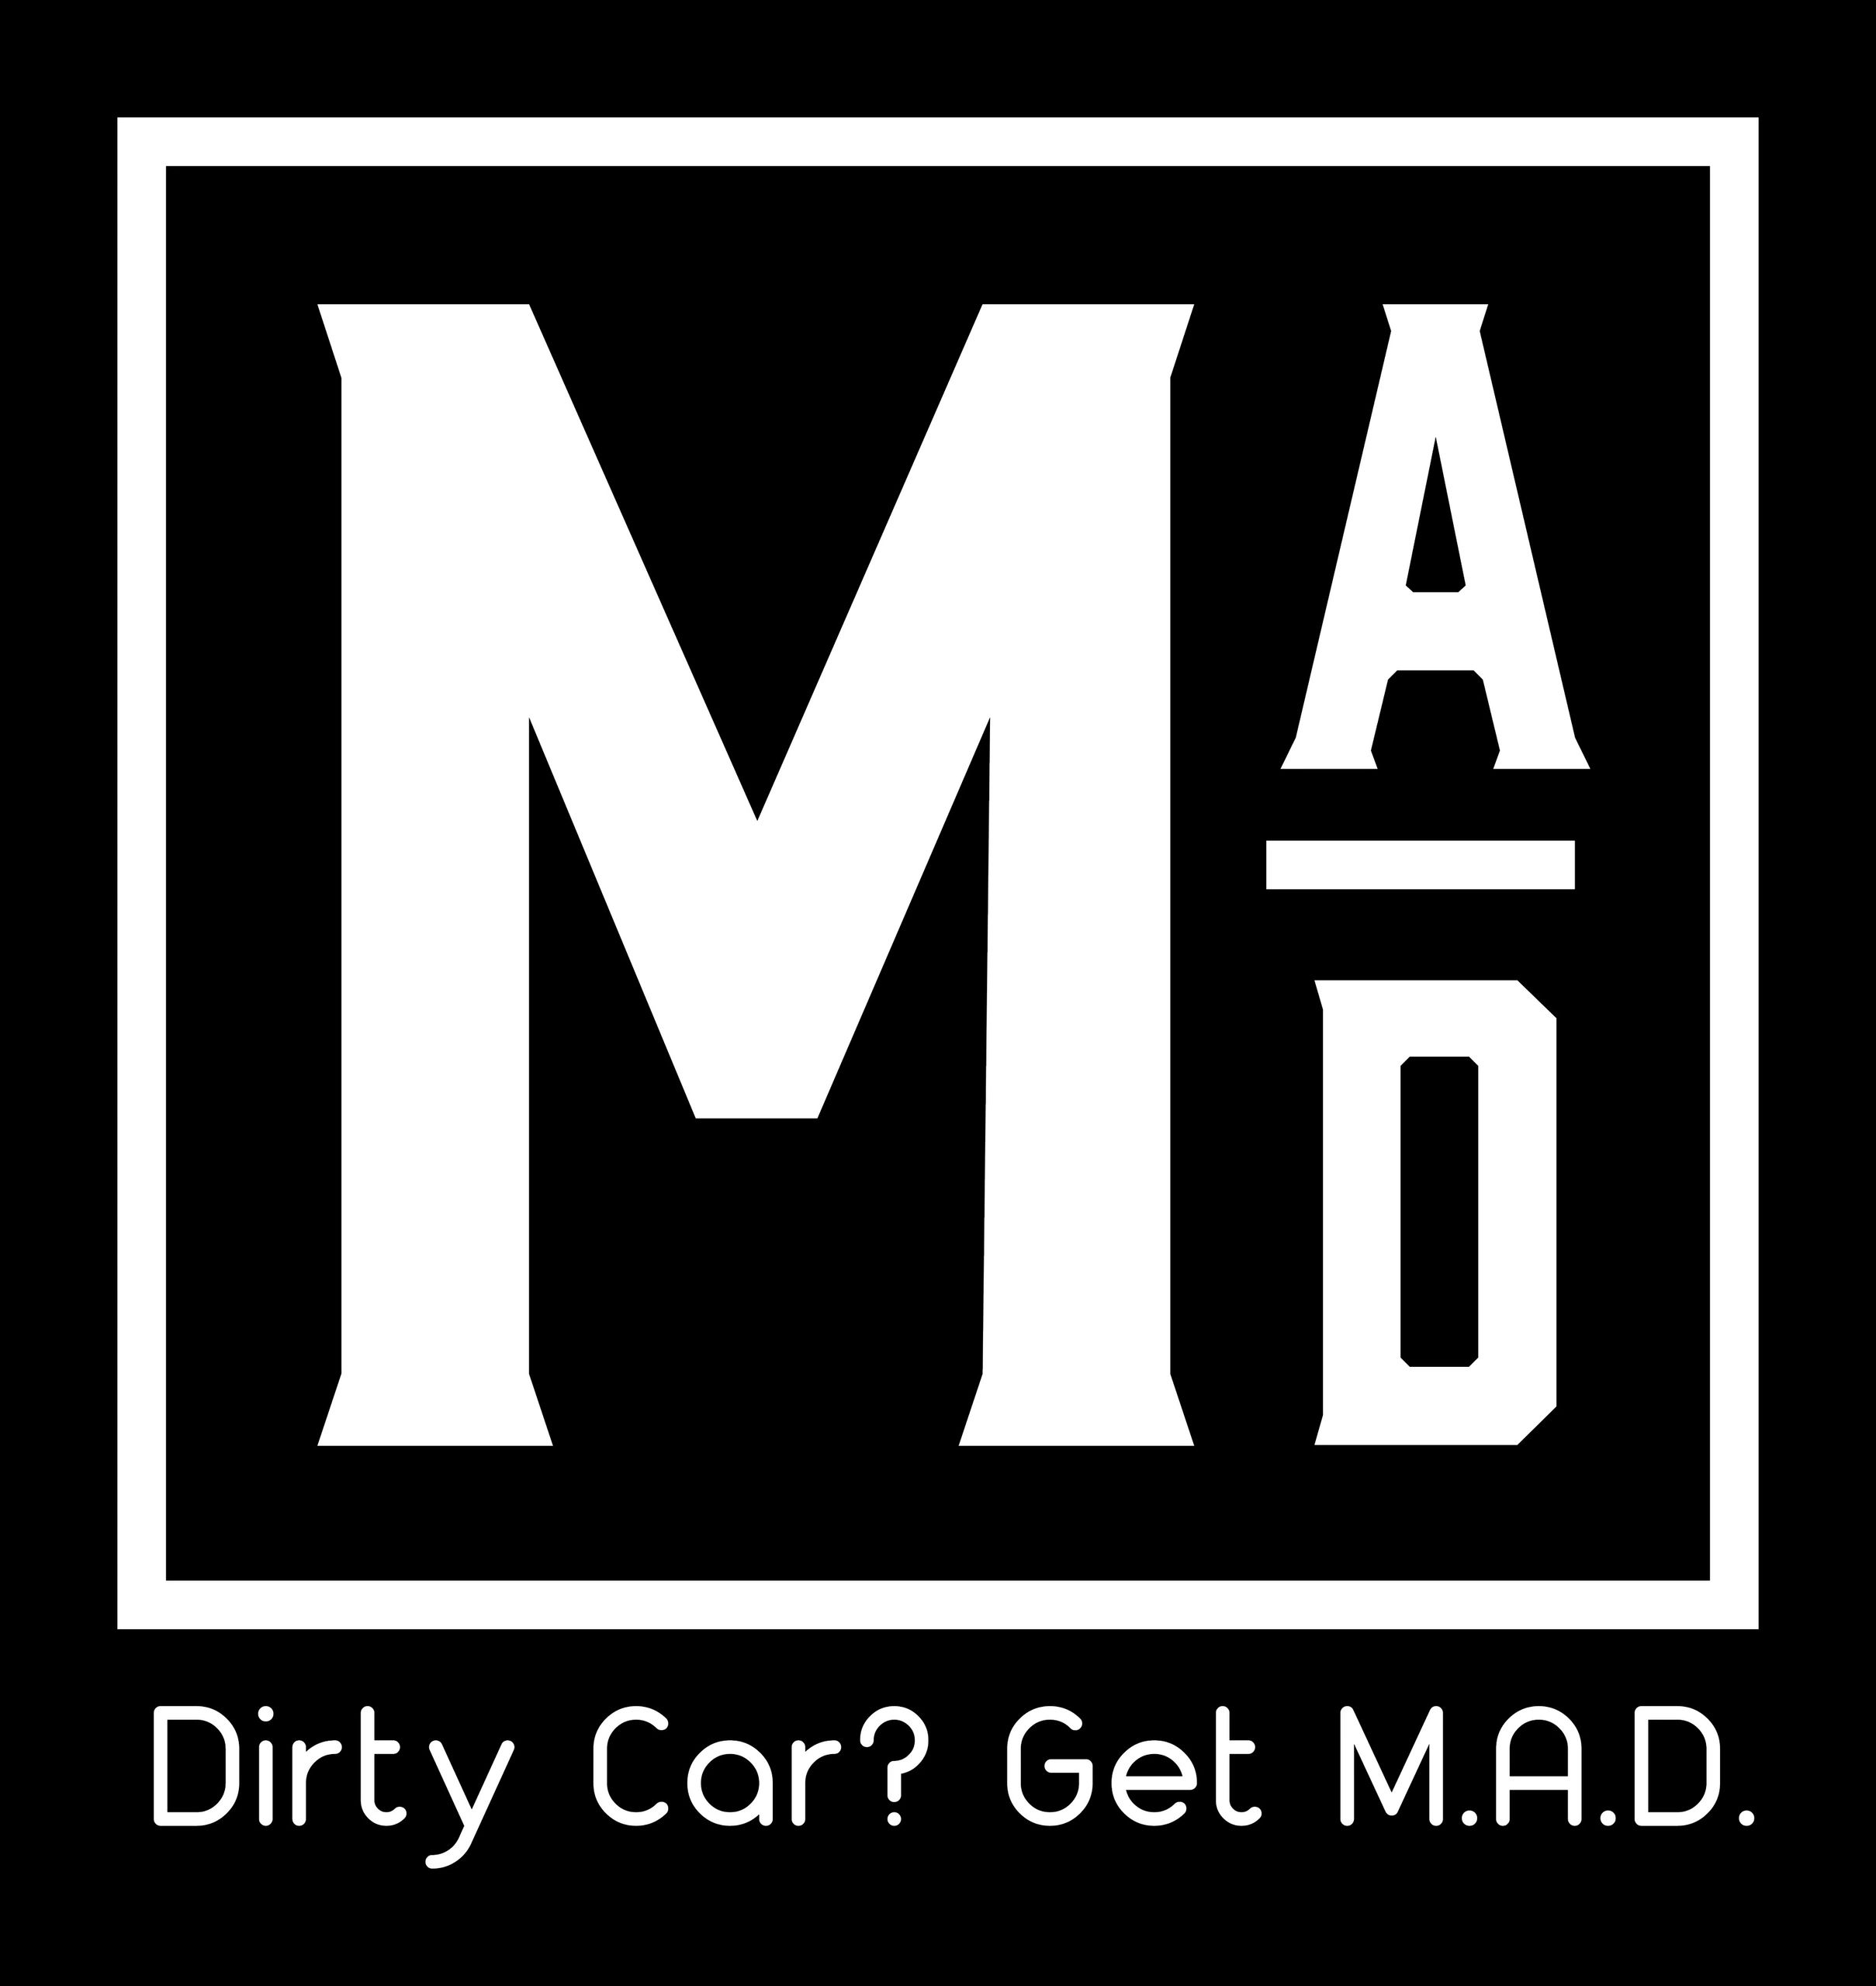 M.A.D. Auto Detailing - Mobile Car Detailing in Davie, FL